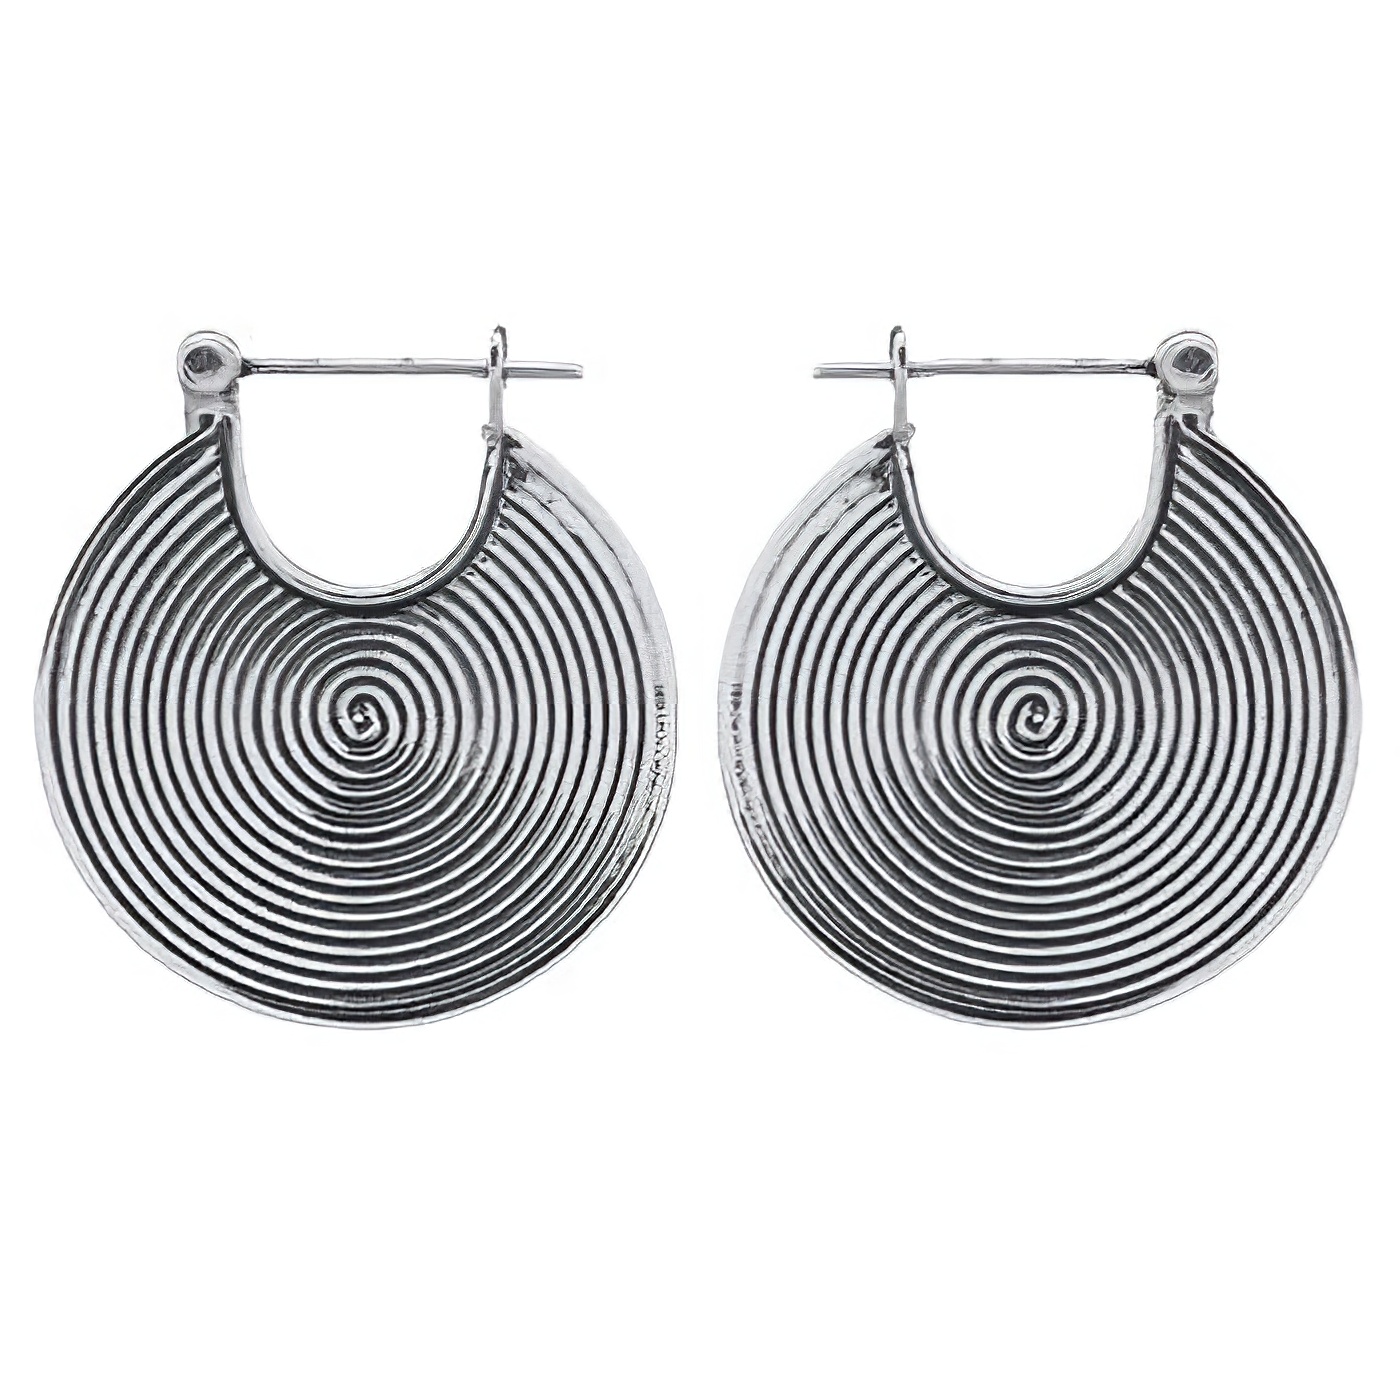 Spiral Hoops 22MM 925 Silver Earrings by BeYindi 